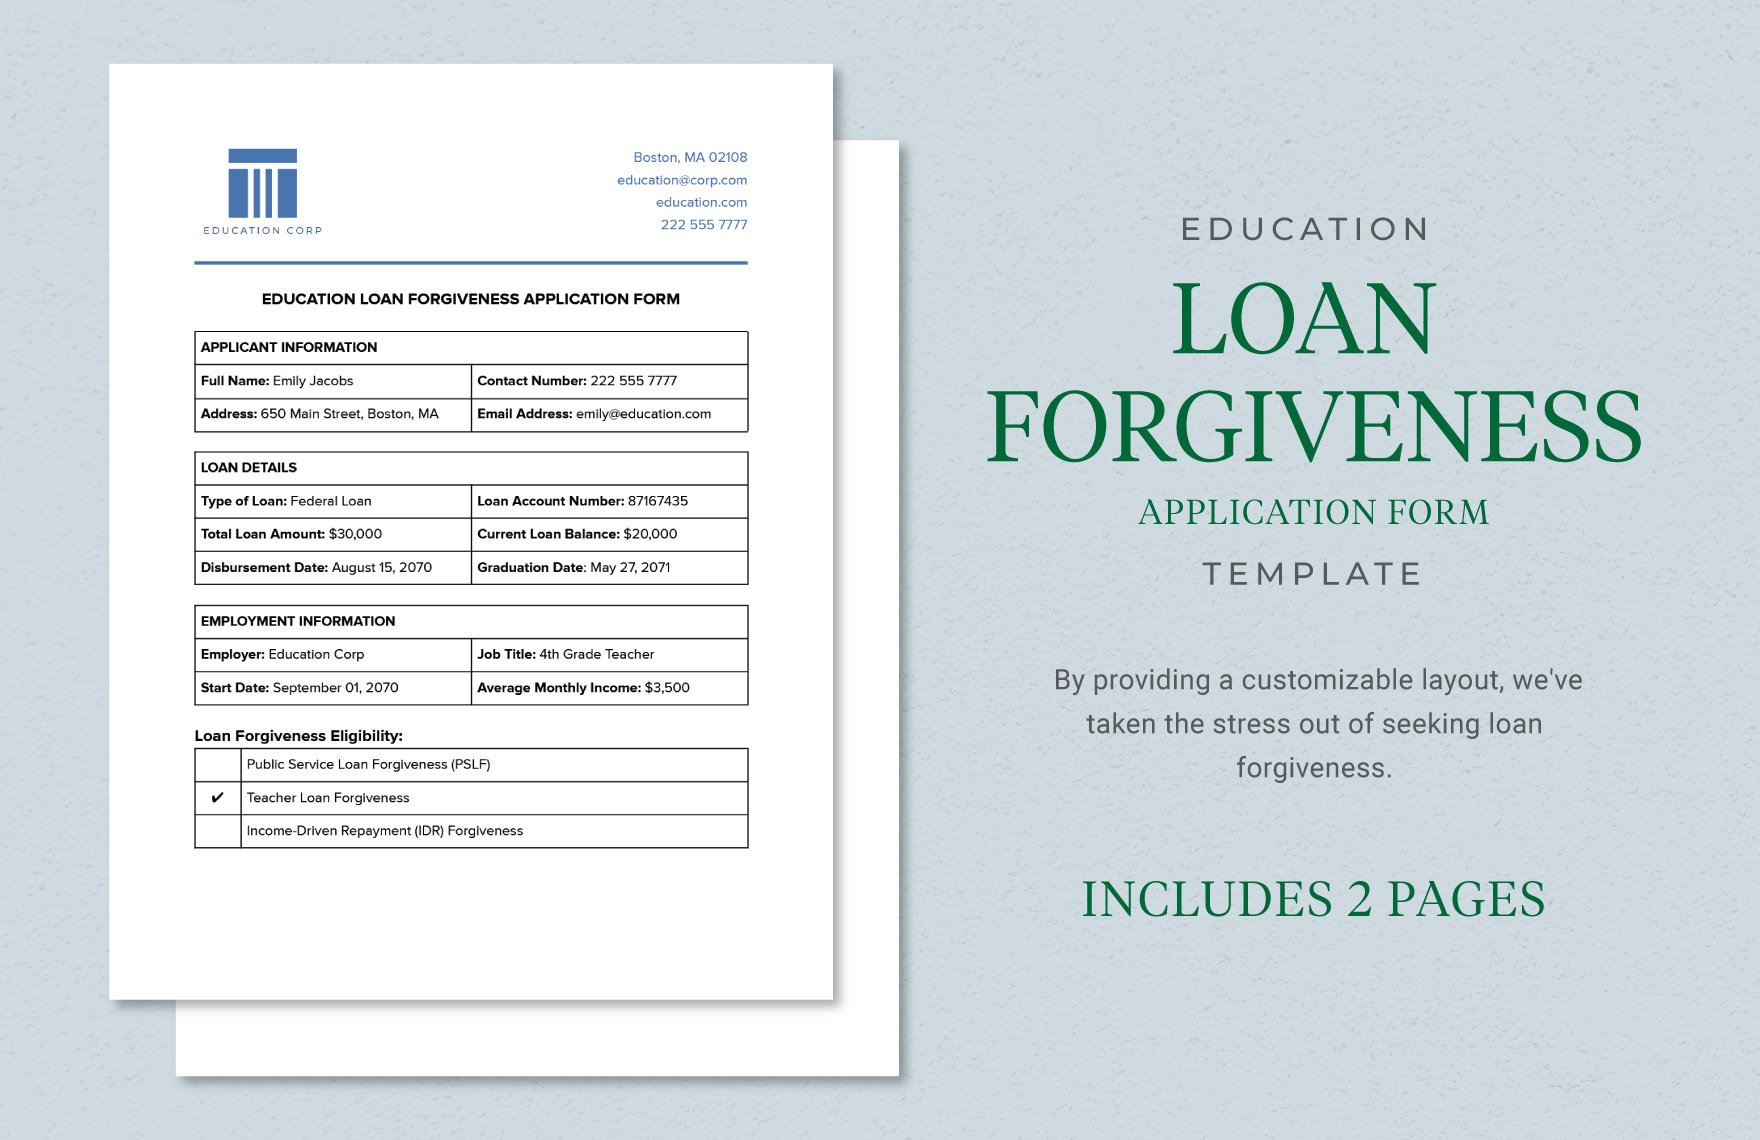 Education Loan Forgiveness Application Form Template in Word, Google Docs, PDF